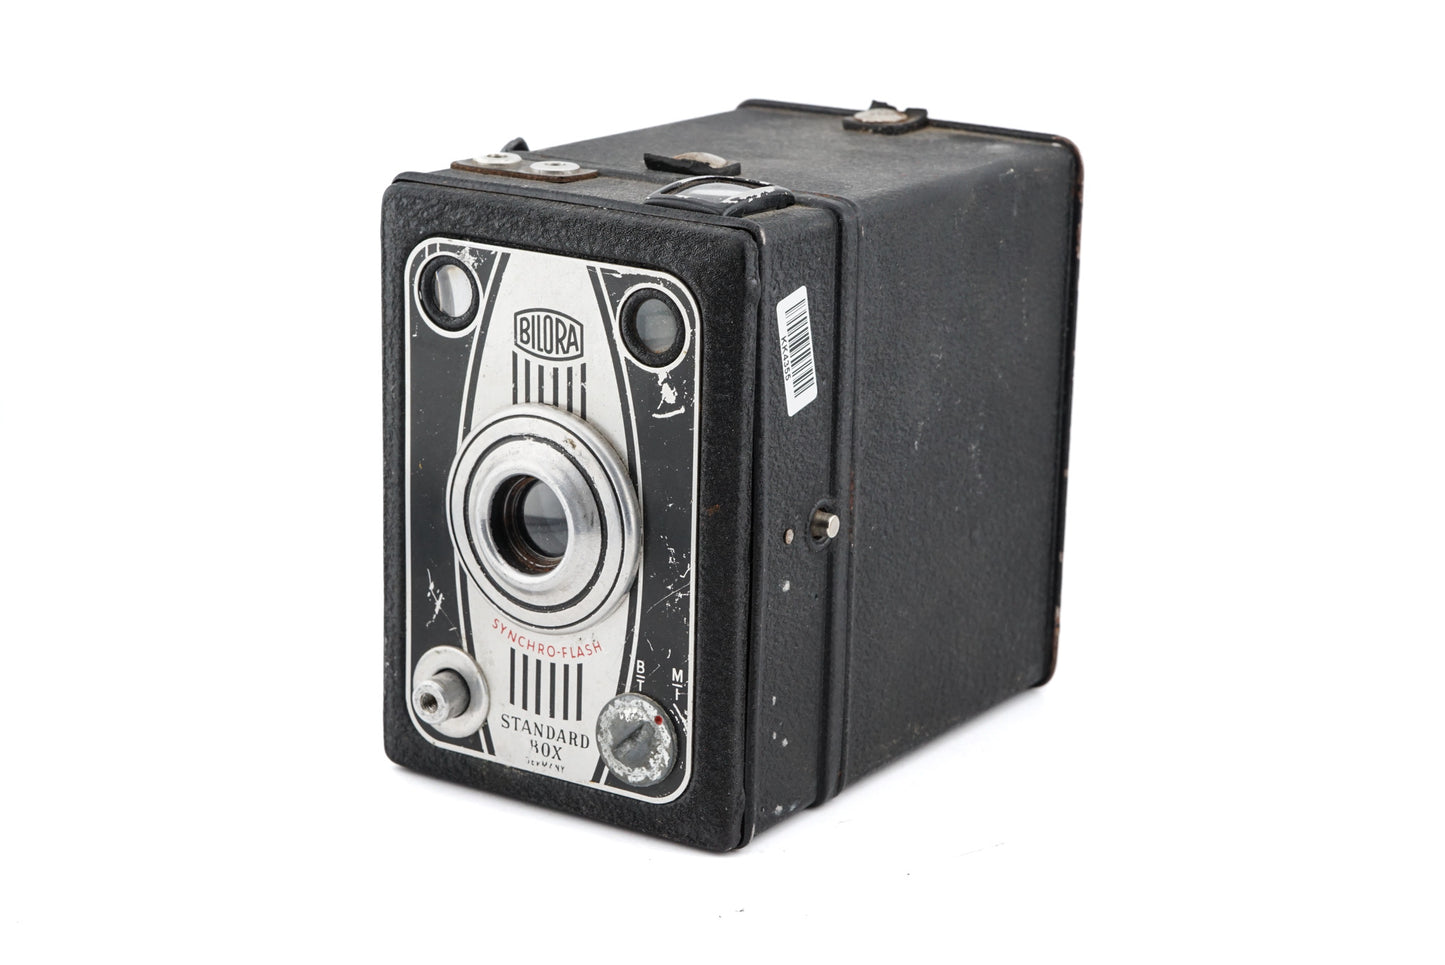 Bilora Standard Box - Camera